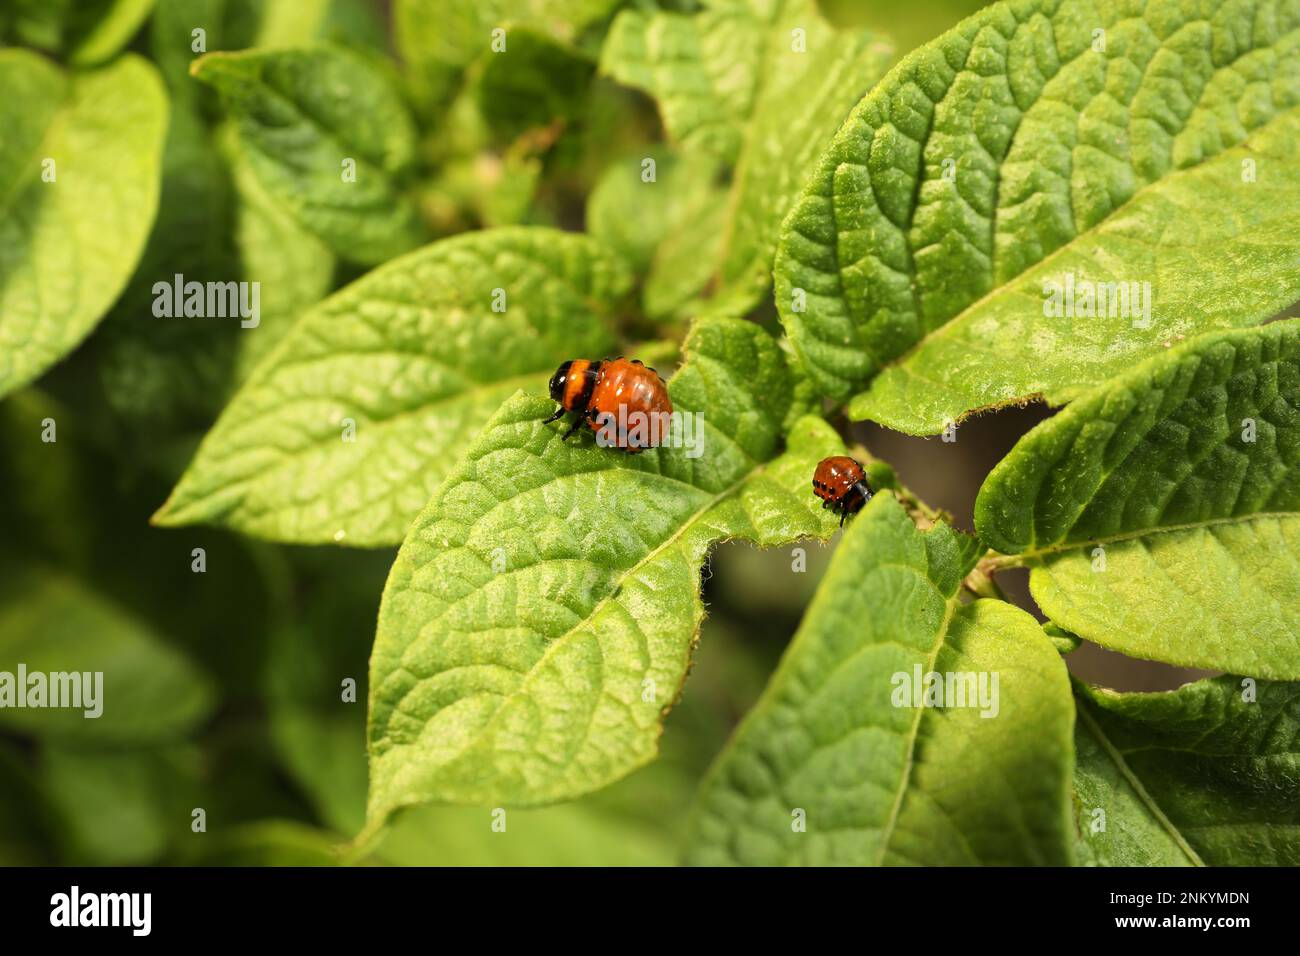 Colorado potato beetle larvae on green plant outdoors, closeup Stock Photo